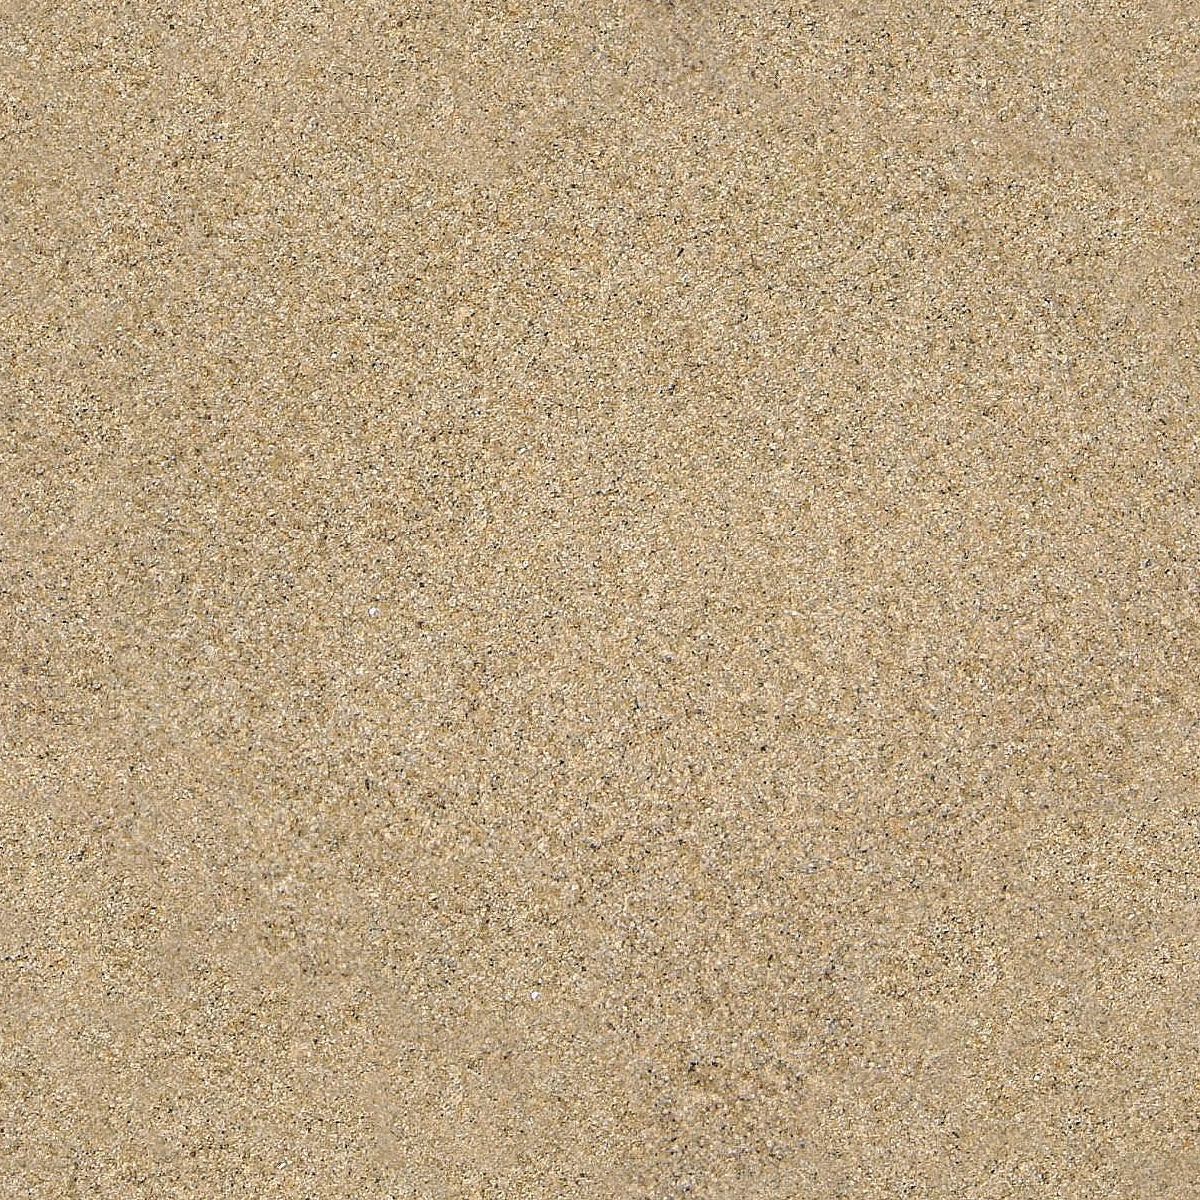 Seamless Beach Sand Texture Bump Map Sand Textures Carpet Samples | My ...